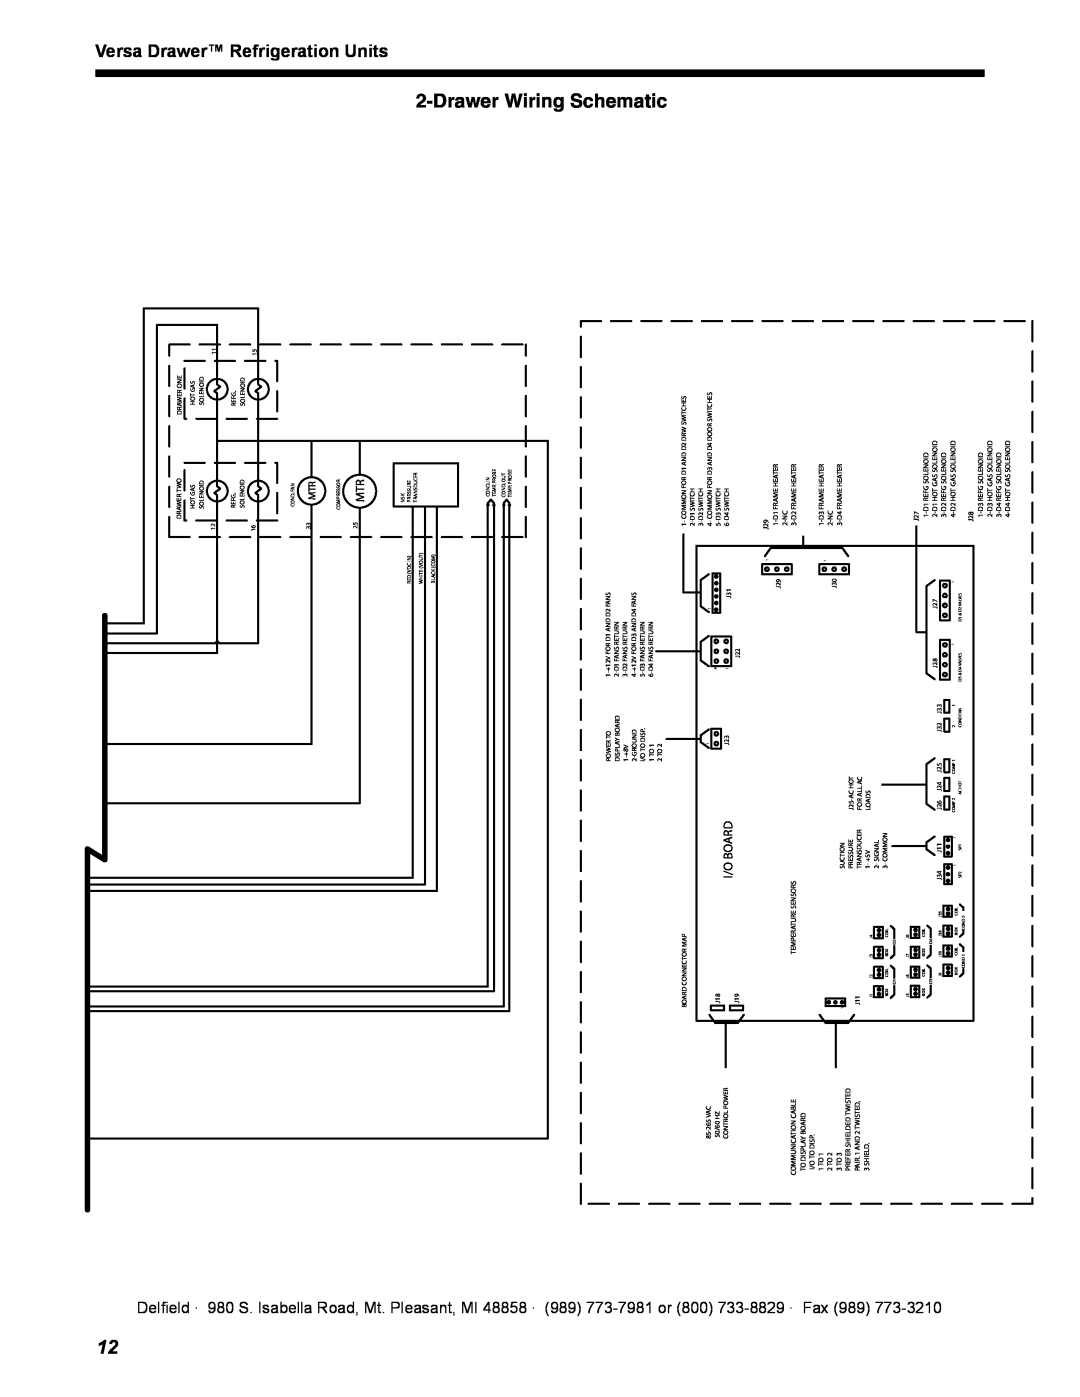 Delfield 18600VD manual Drawer Wiring, Versa Drawer Refrigeration Units, Schematic, 7981 or 